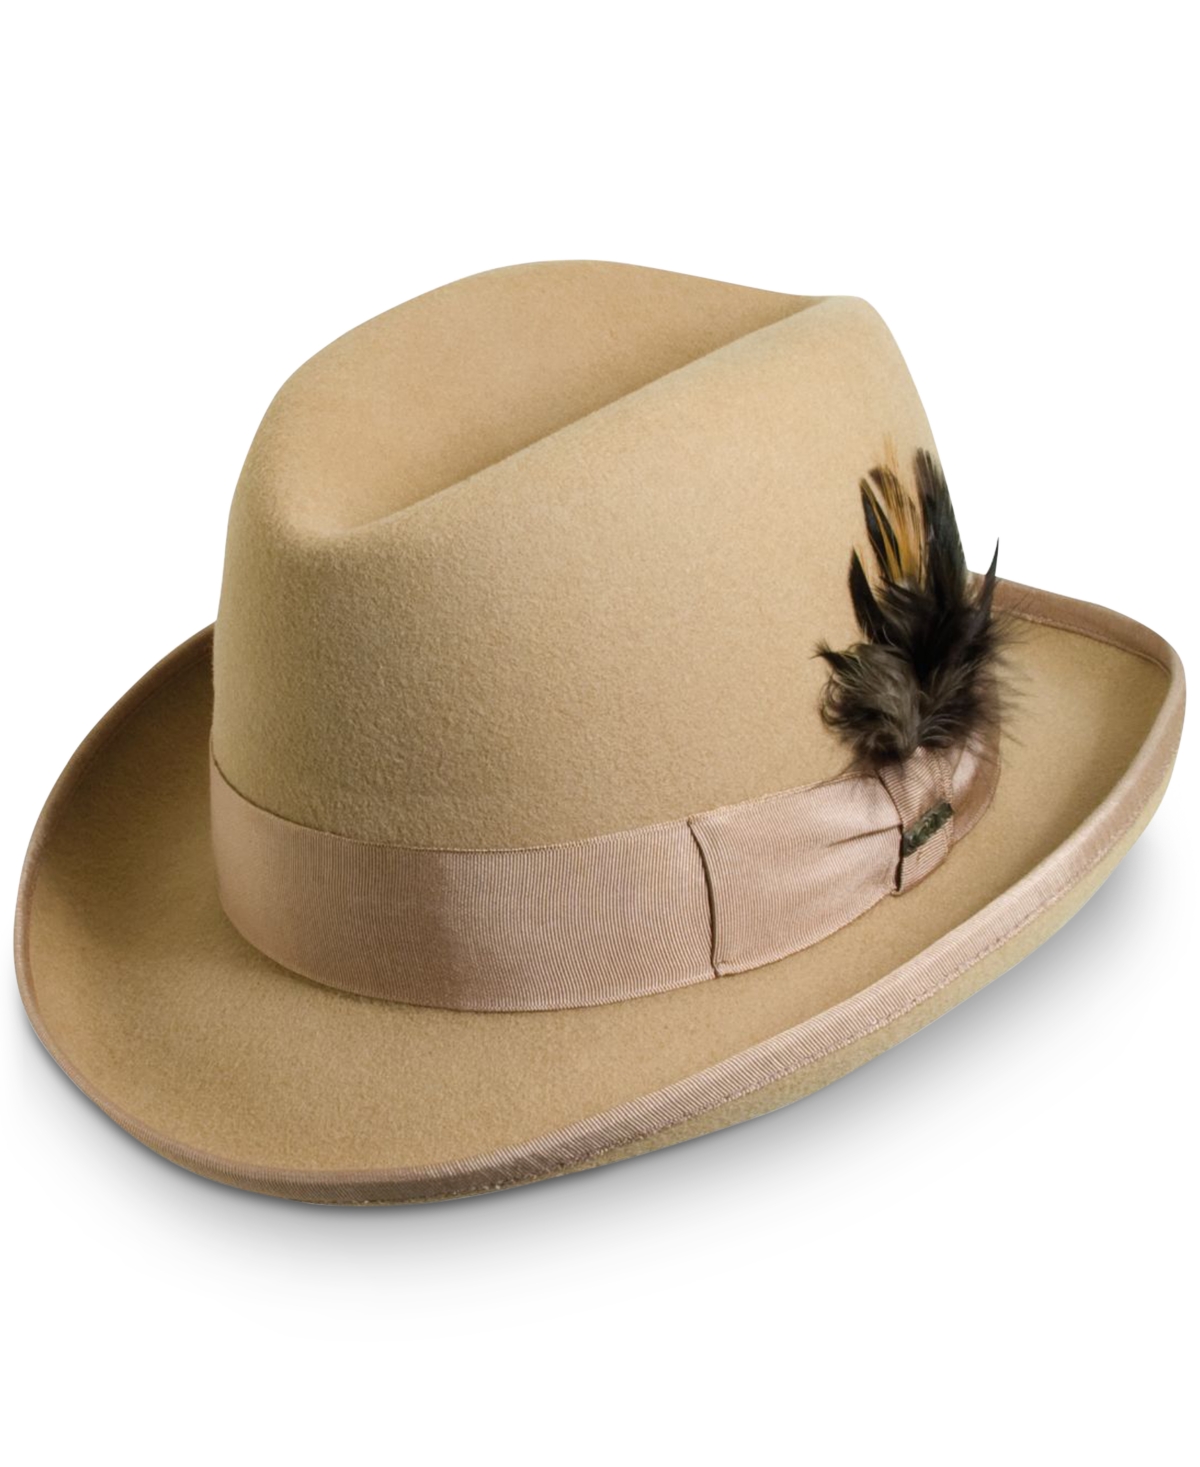 Men's Wool Homburg Hat - Camel